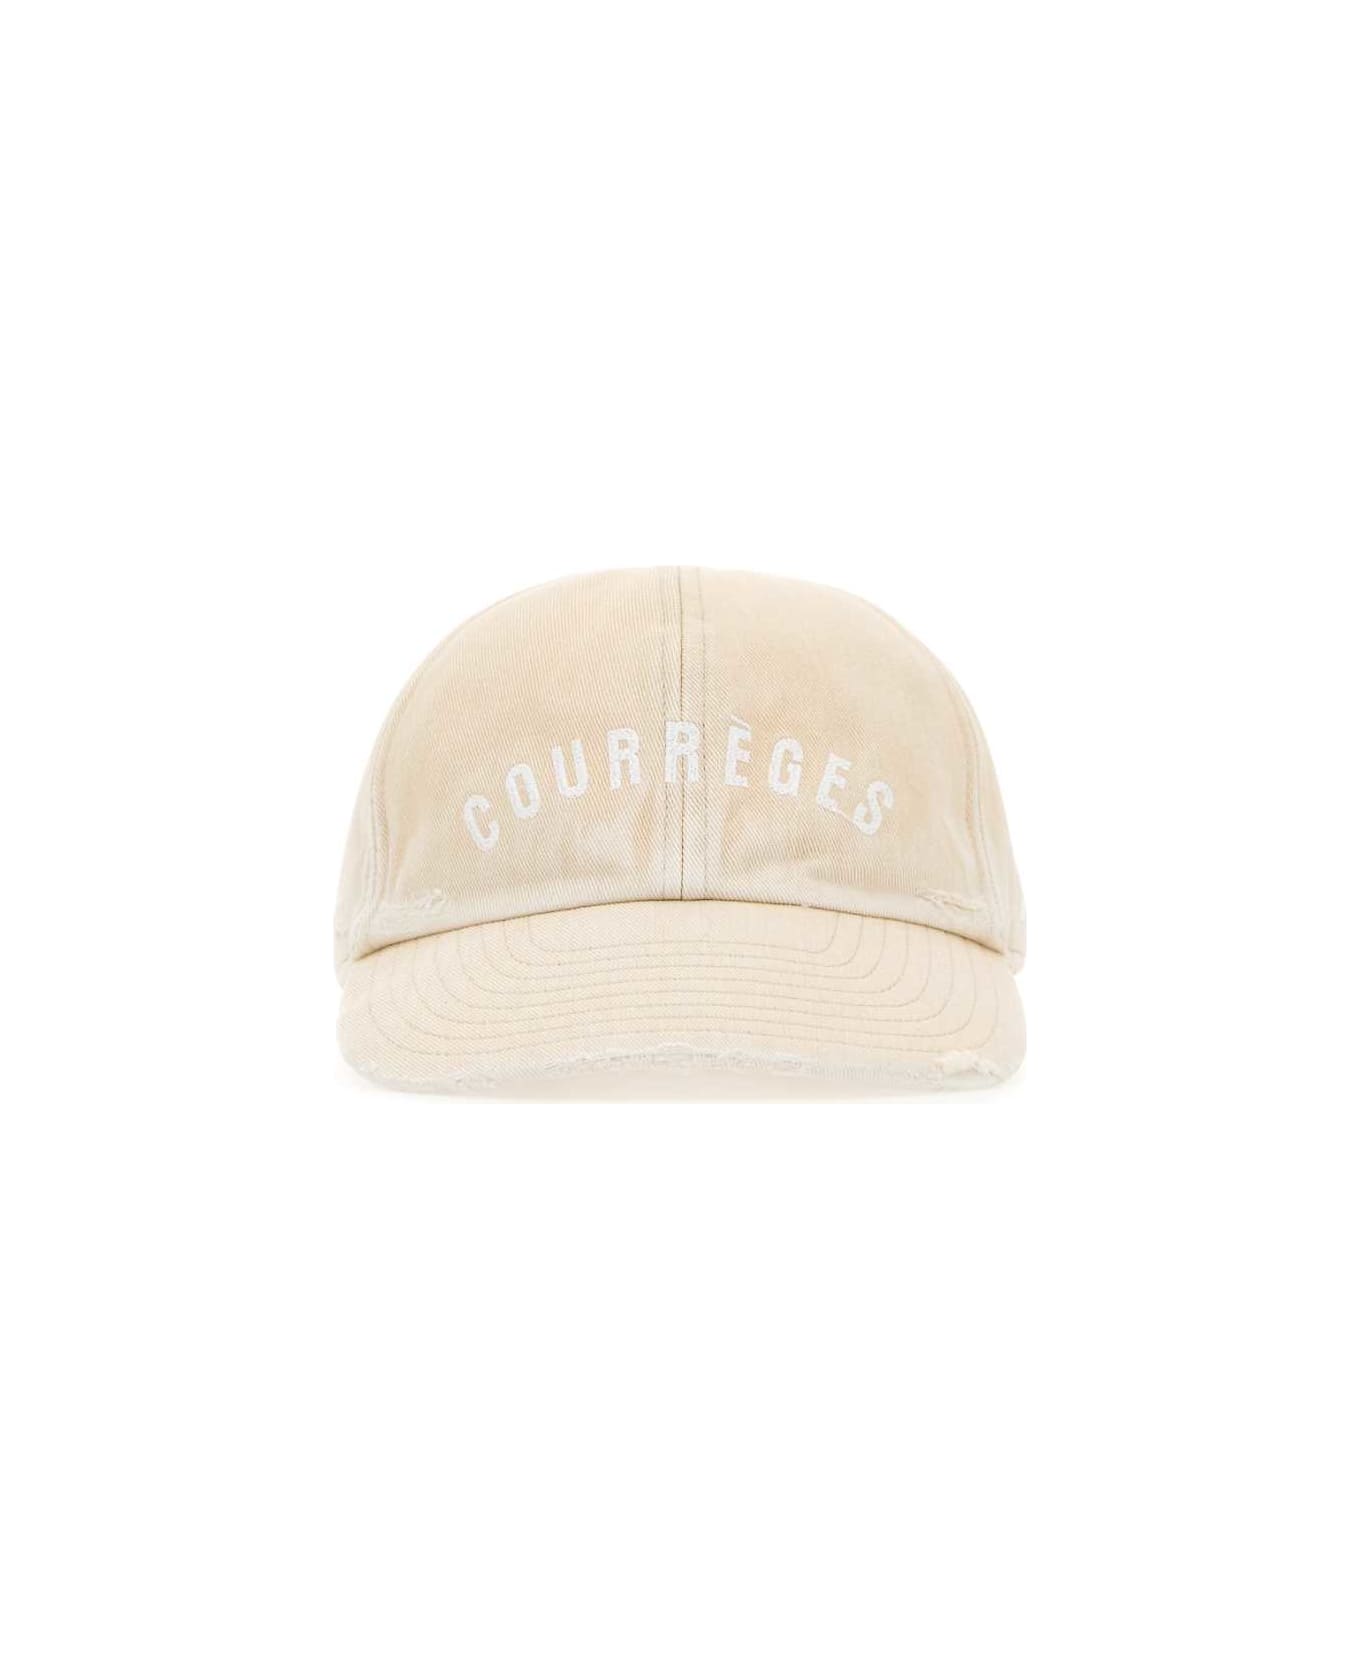 Courrèges Sand Cotton Baseball Cap - OATMEAL 帽子